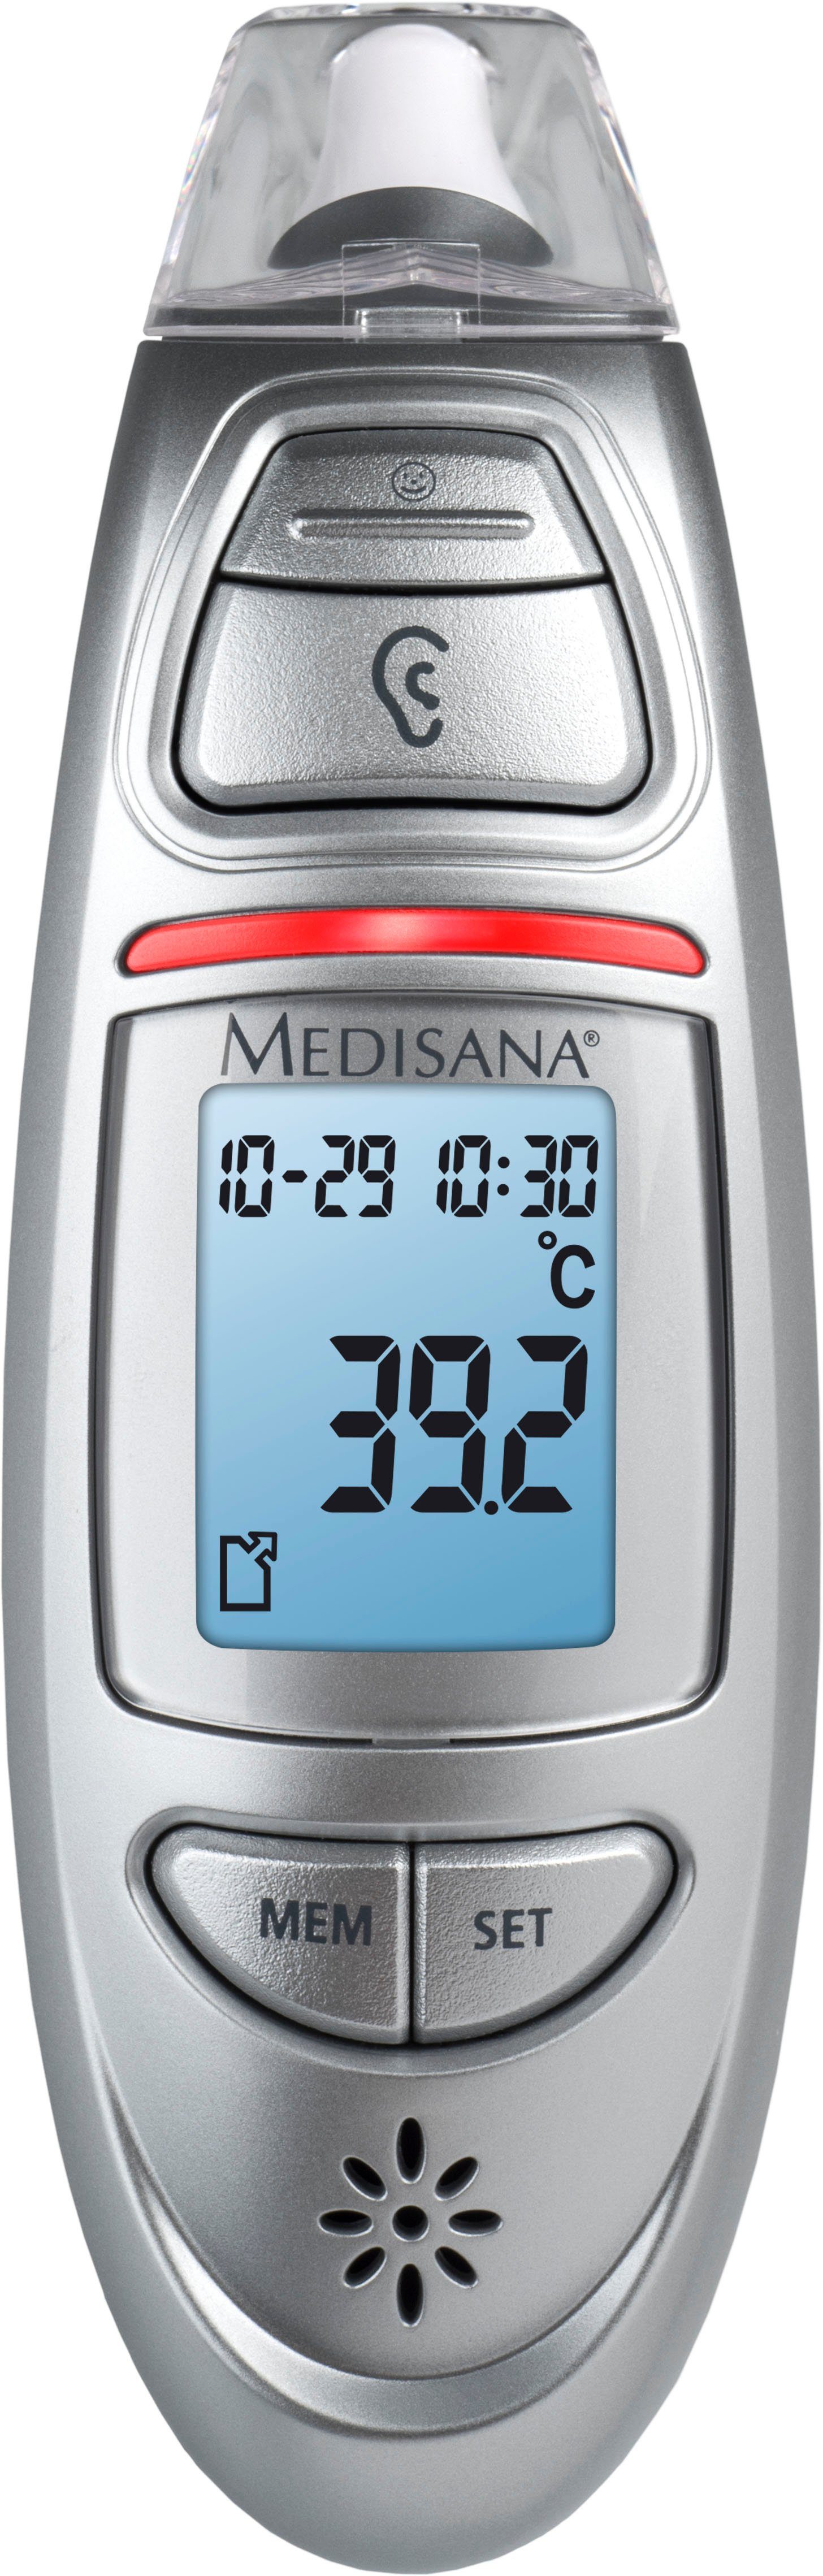 TM Medisana Connect 750 Fieberthermometer